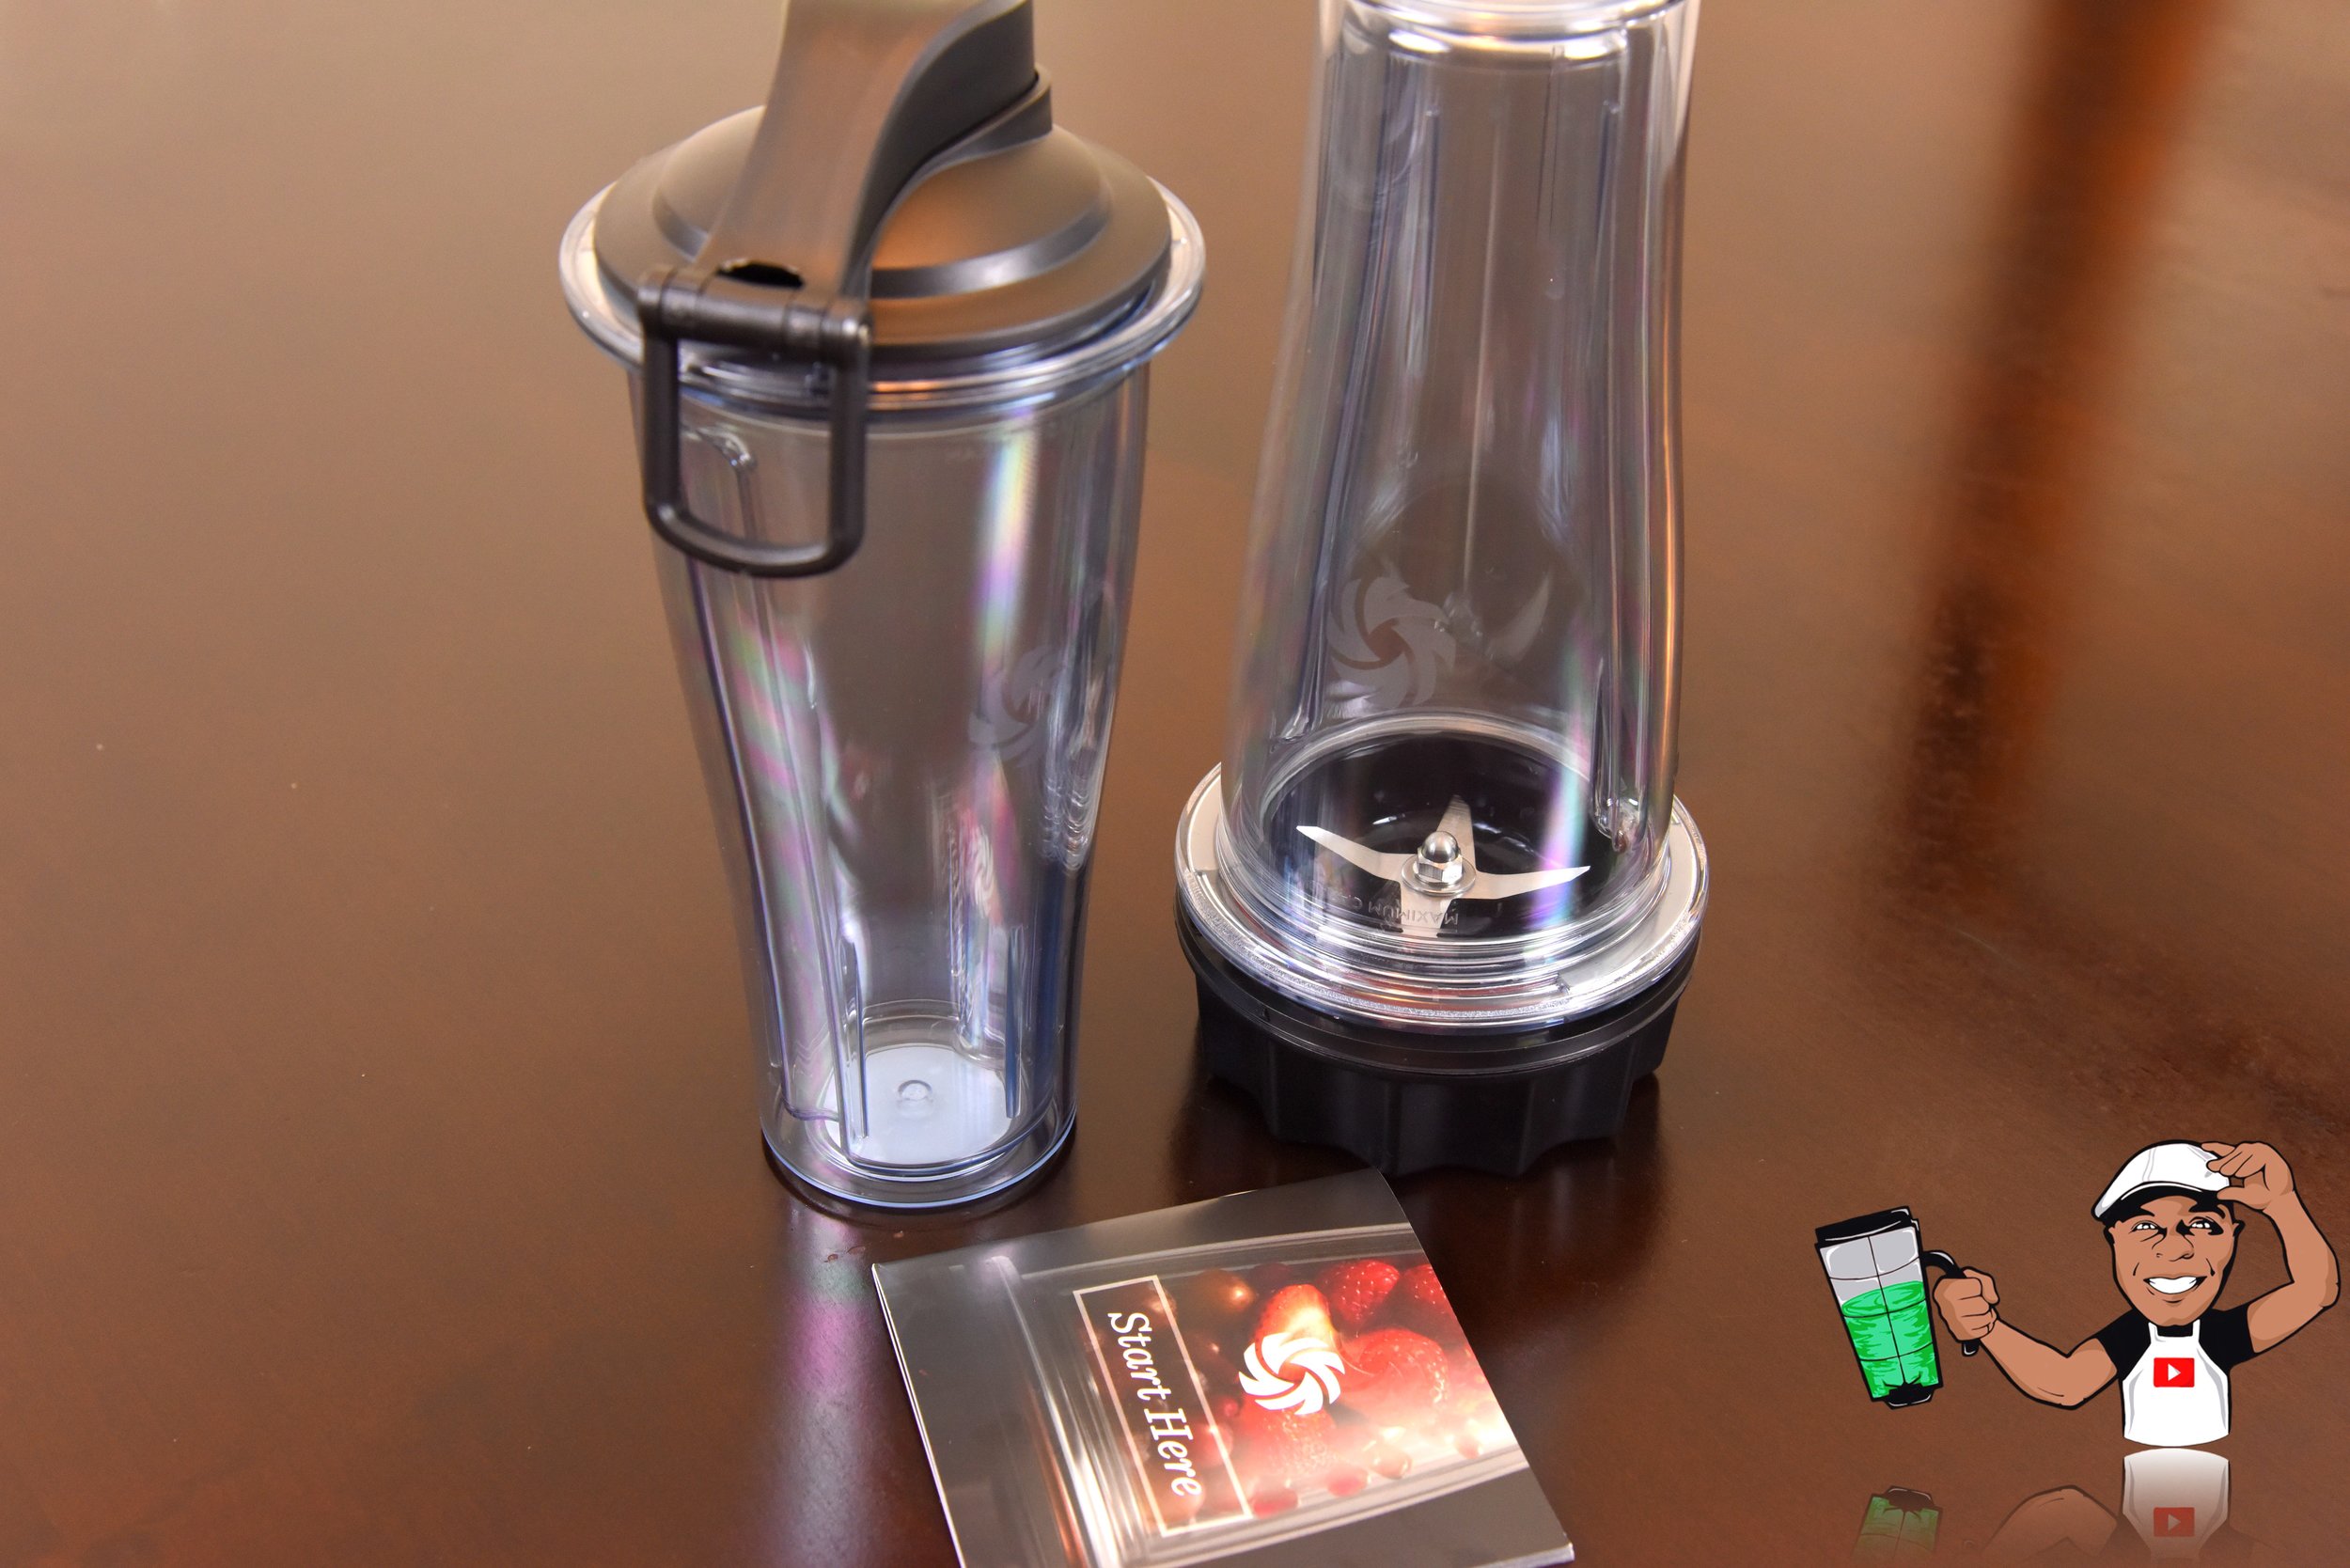 Blending Cup Starter Kit for Vitamix Ascent Series Blenders Black